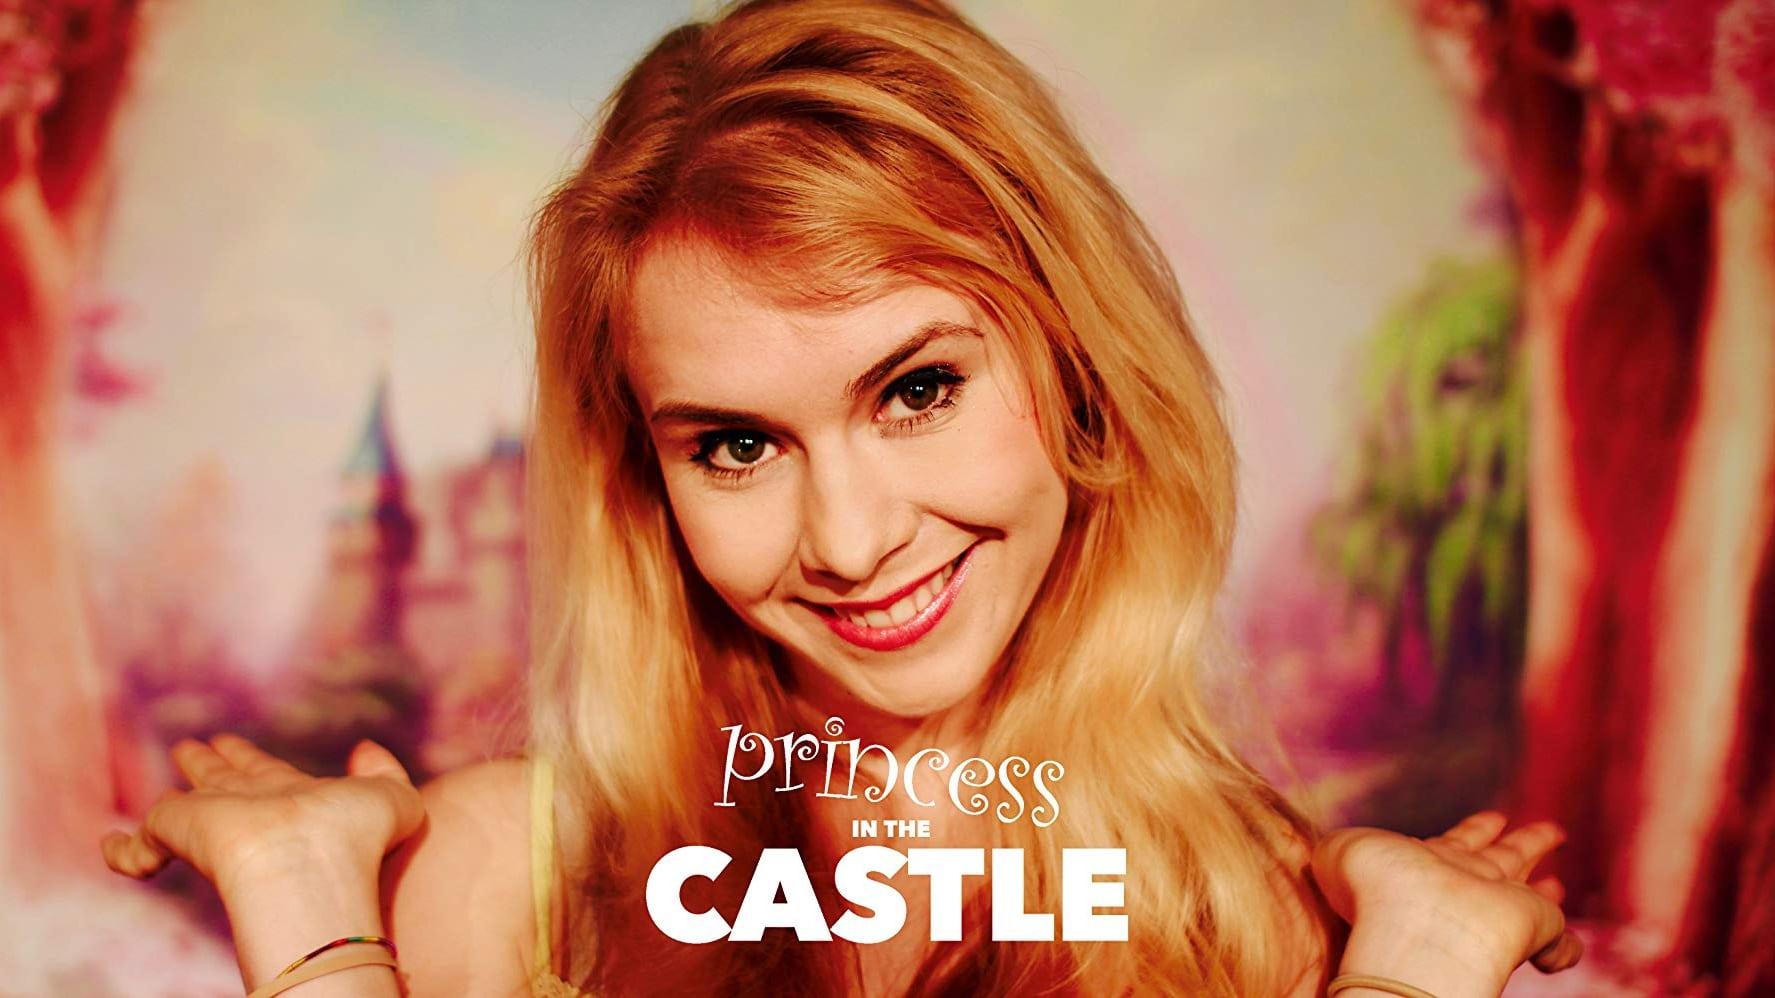 Princess in the Castle backdrop